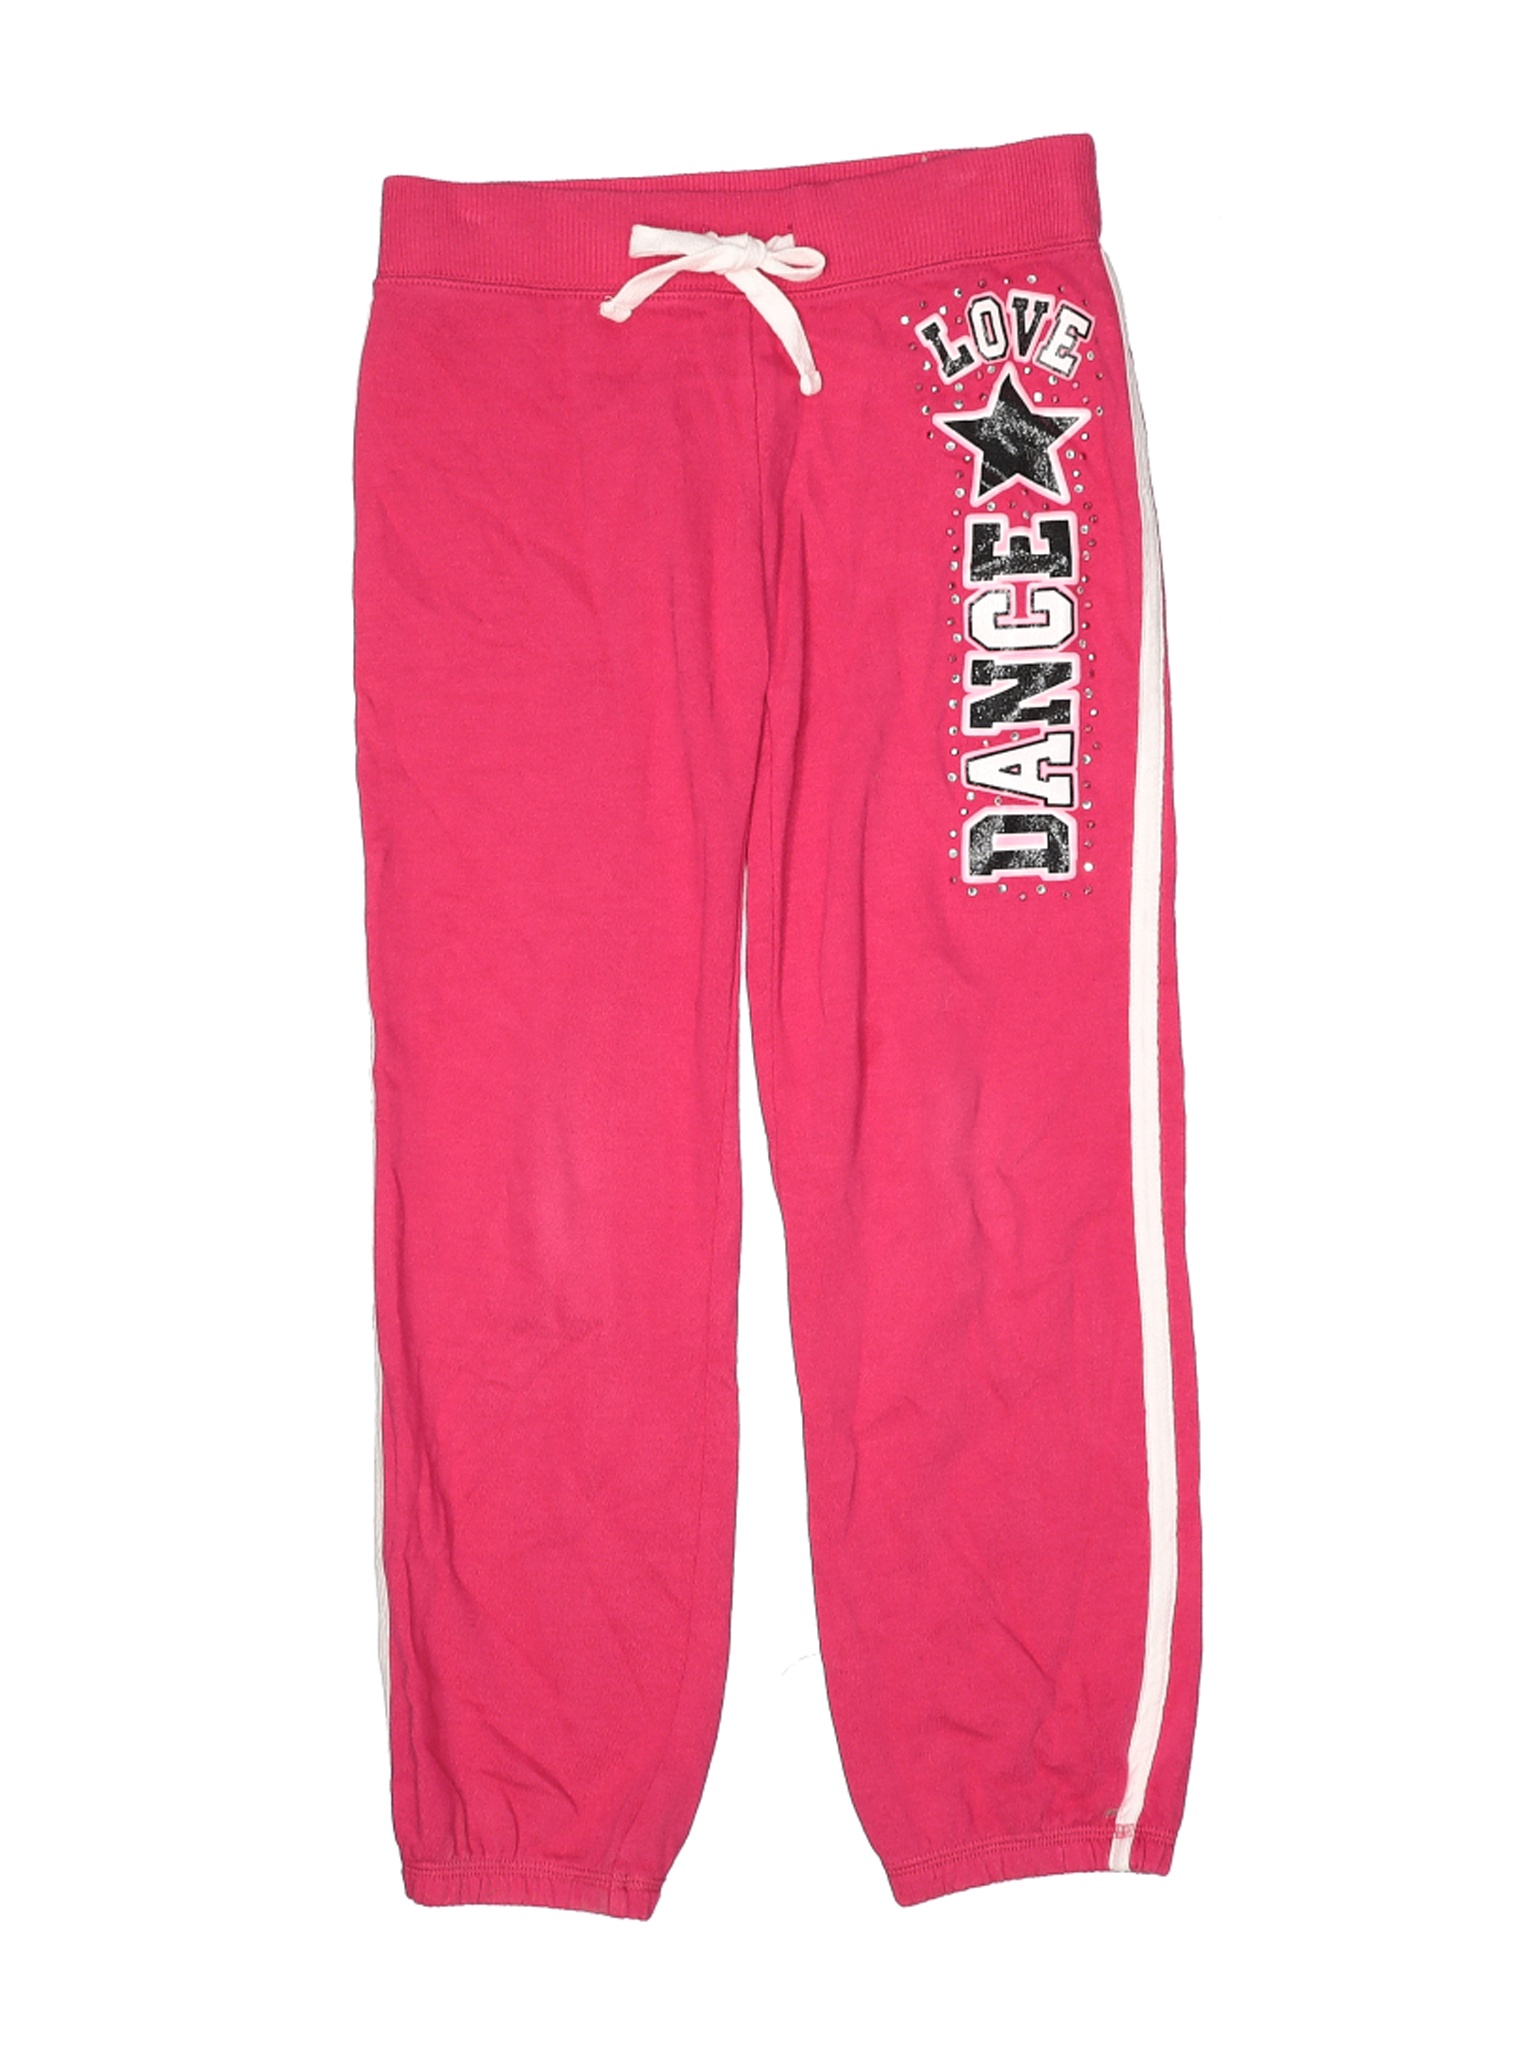 Justice Girls Pink Sweatpants 10 | eBay